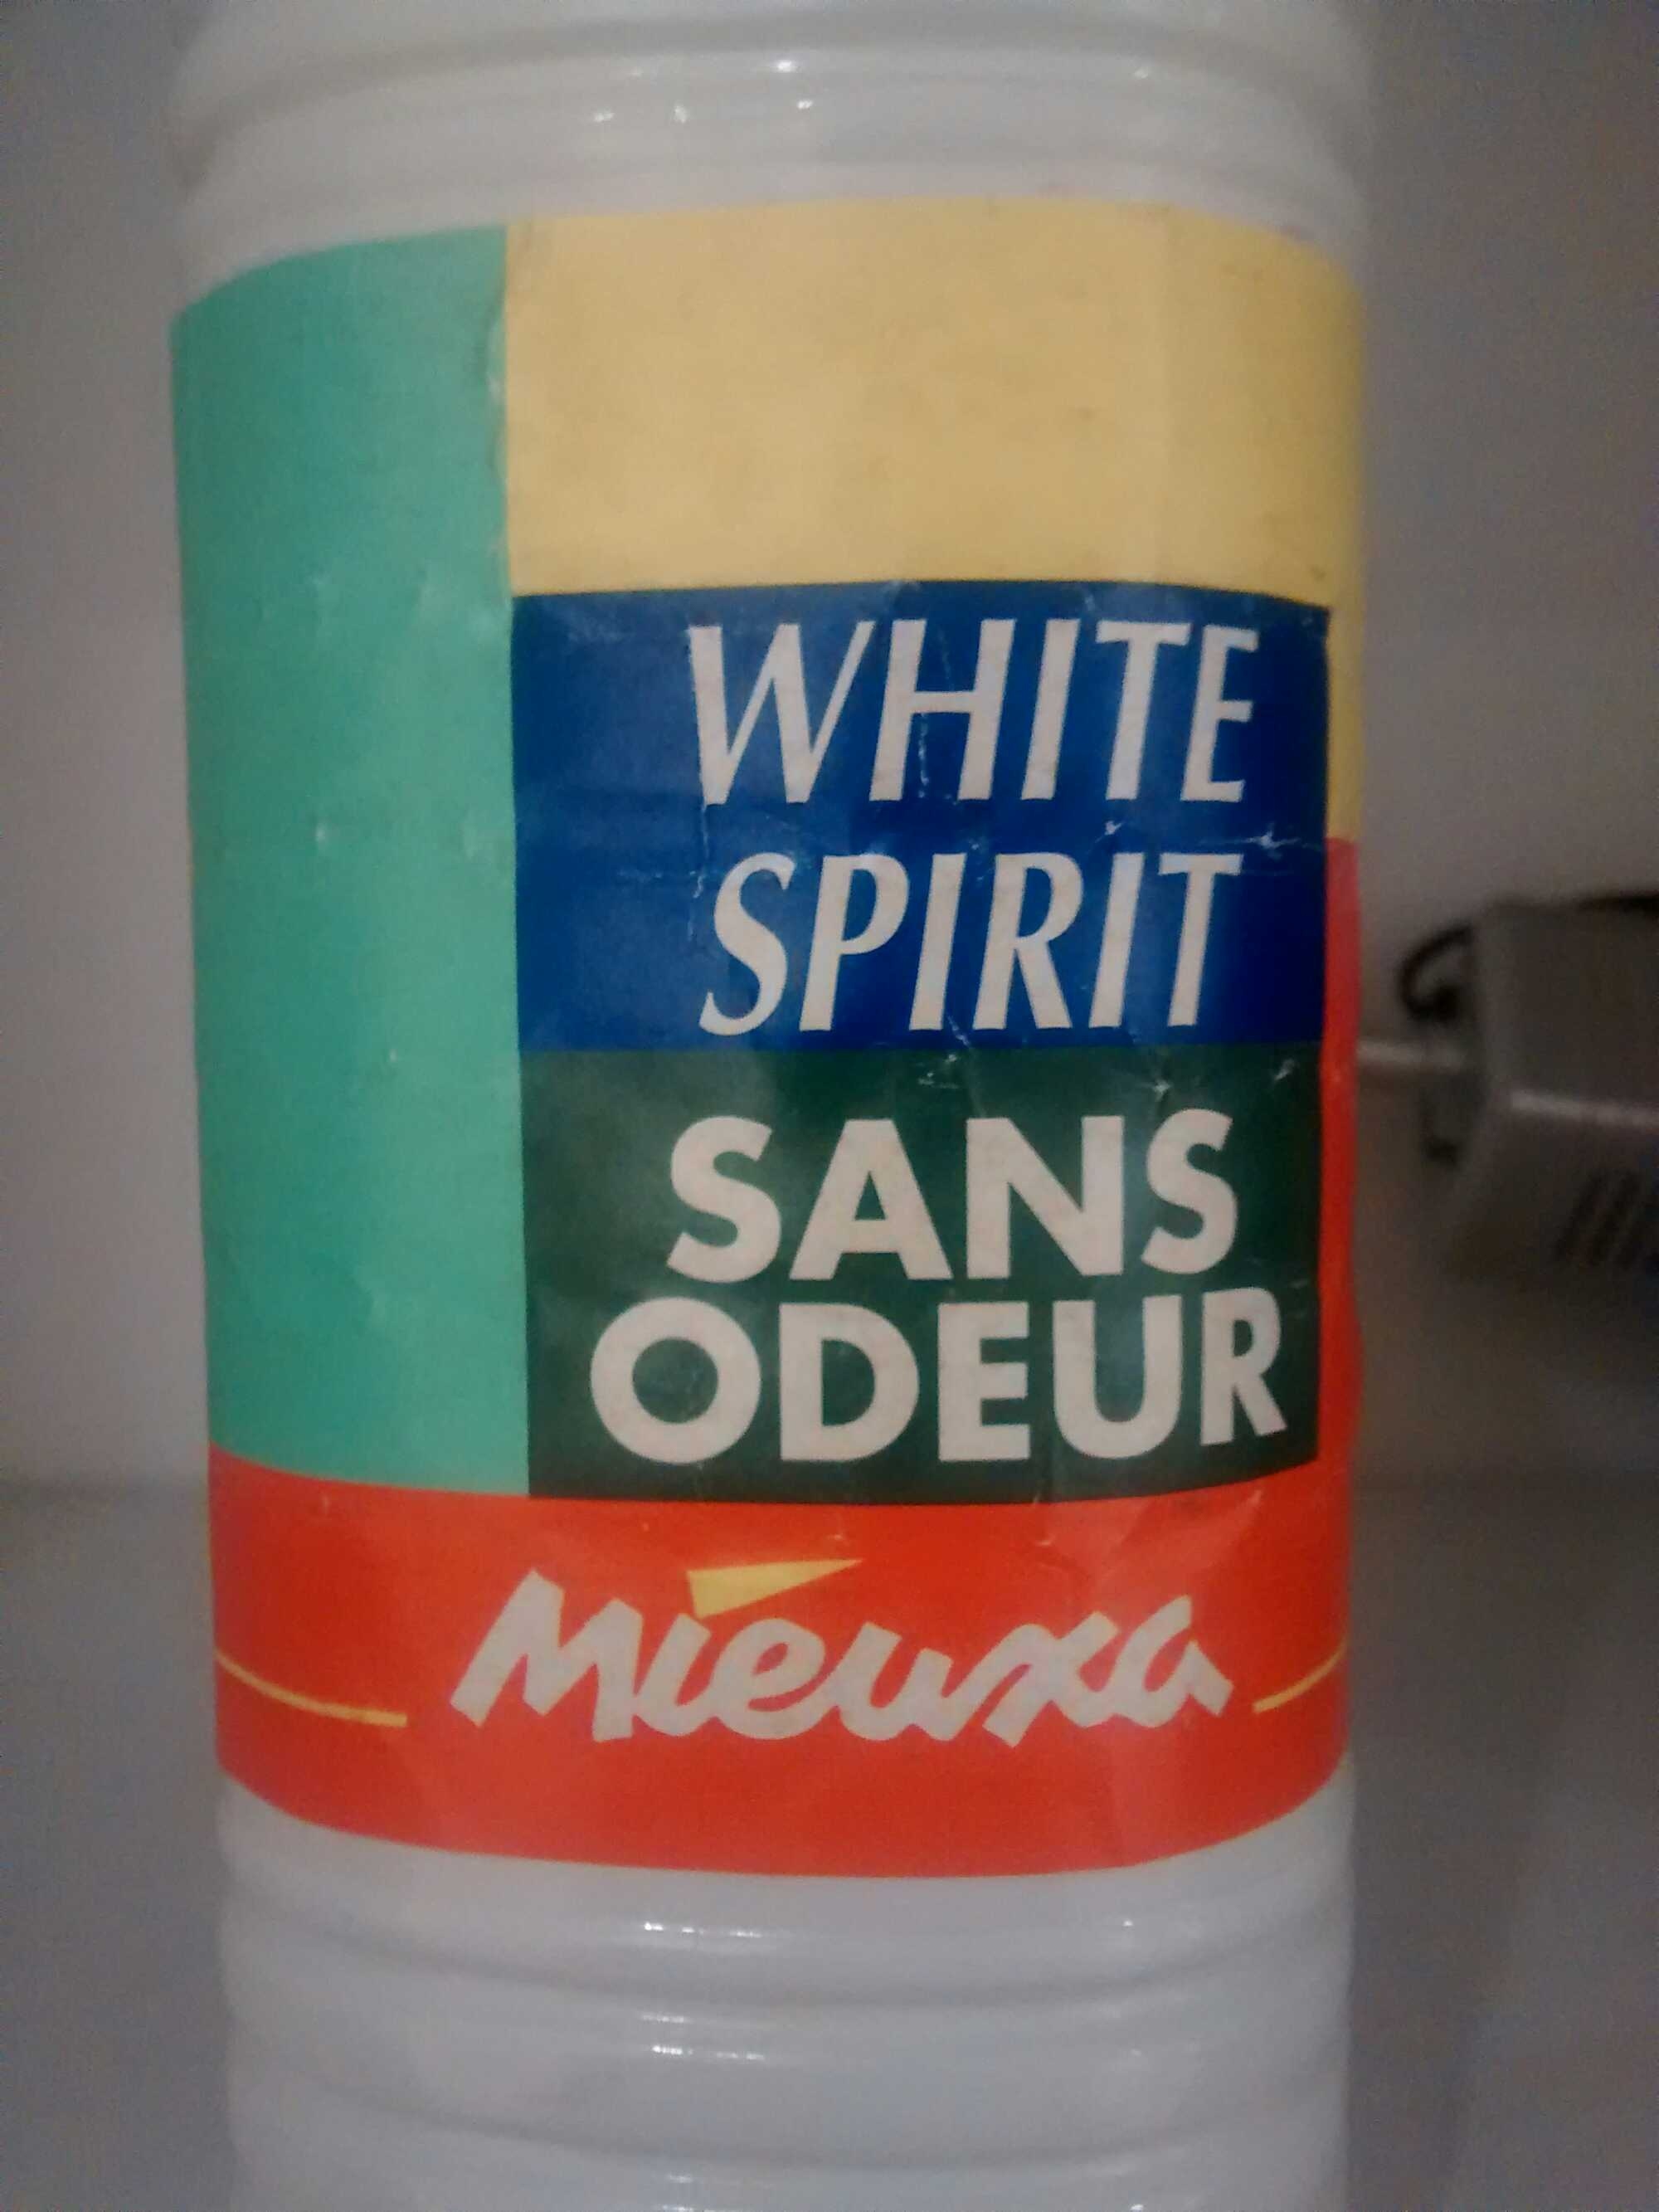 White spirit sans odeur - Produkt - en